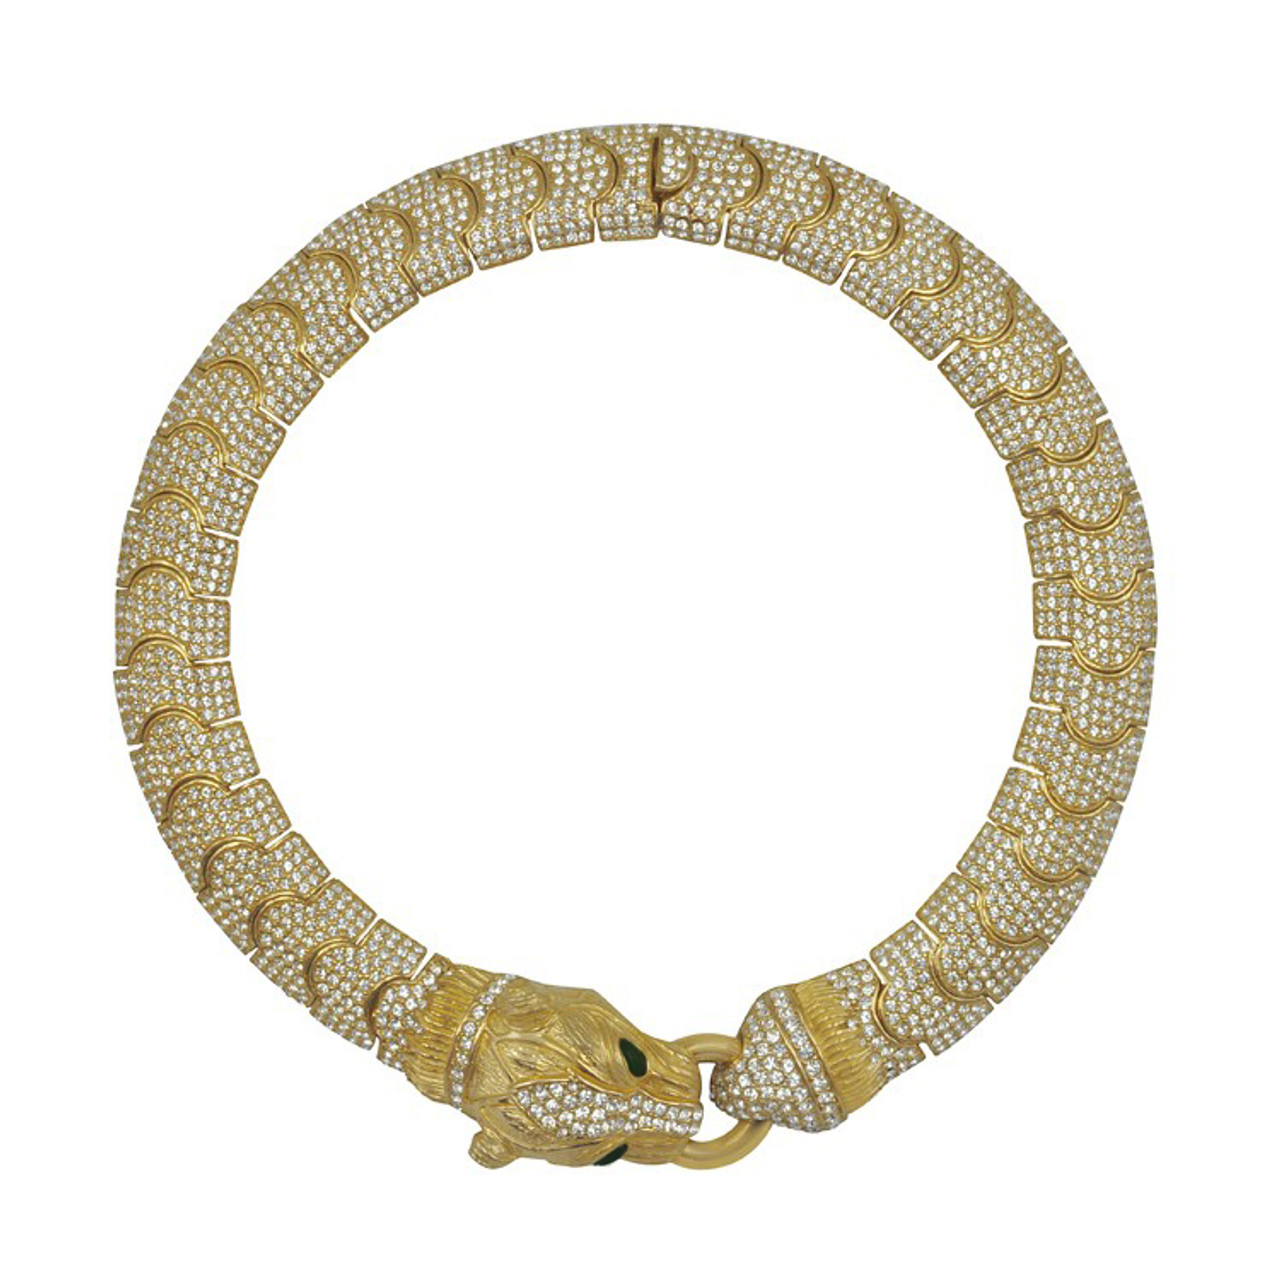 HEAVY! 100 grams Stunning Sterling Silver Panther Link Necklace refJ982 |  eBay